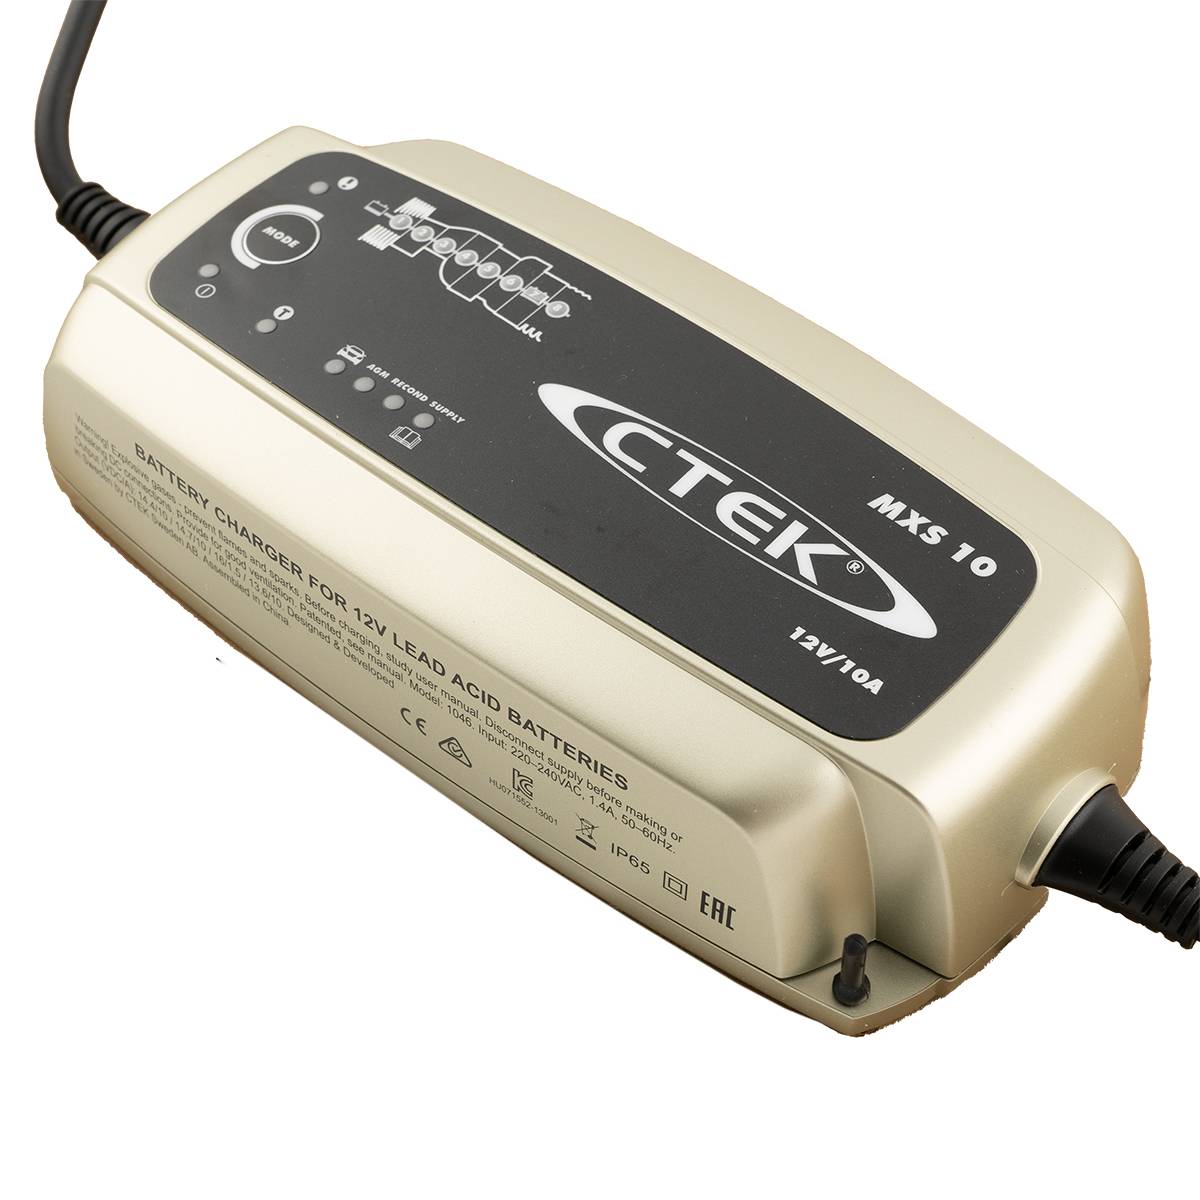 CTEK MXS 10 CIC EU Batterie Ladegerät 12V 10A für Bleiakkus